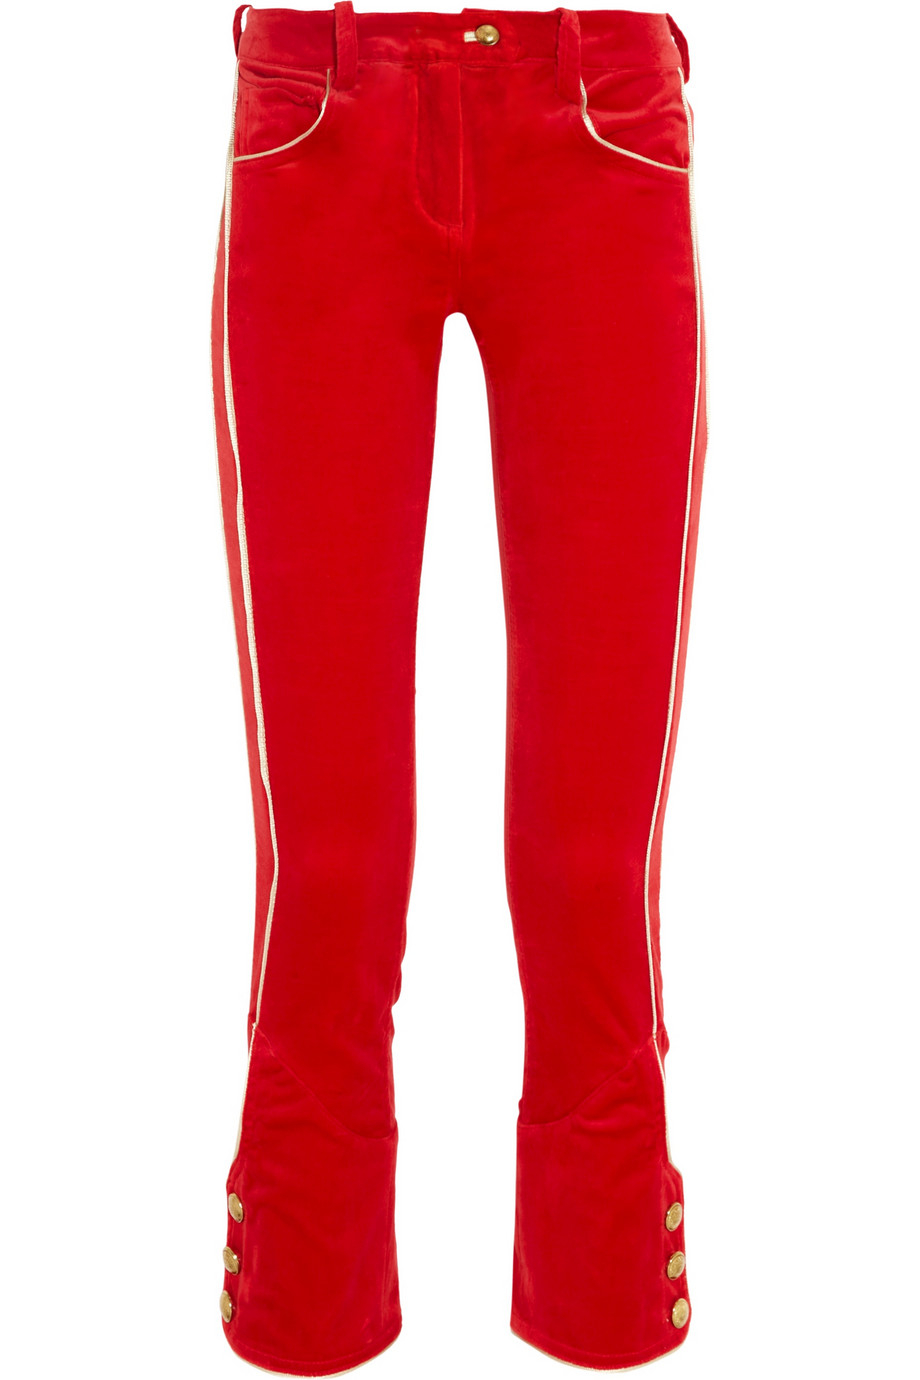 Isabel Marant Bauer Cropped Velvet Skinny Pants in Red - Lyst